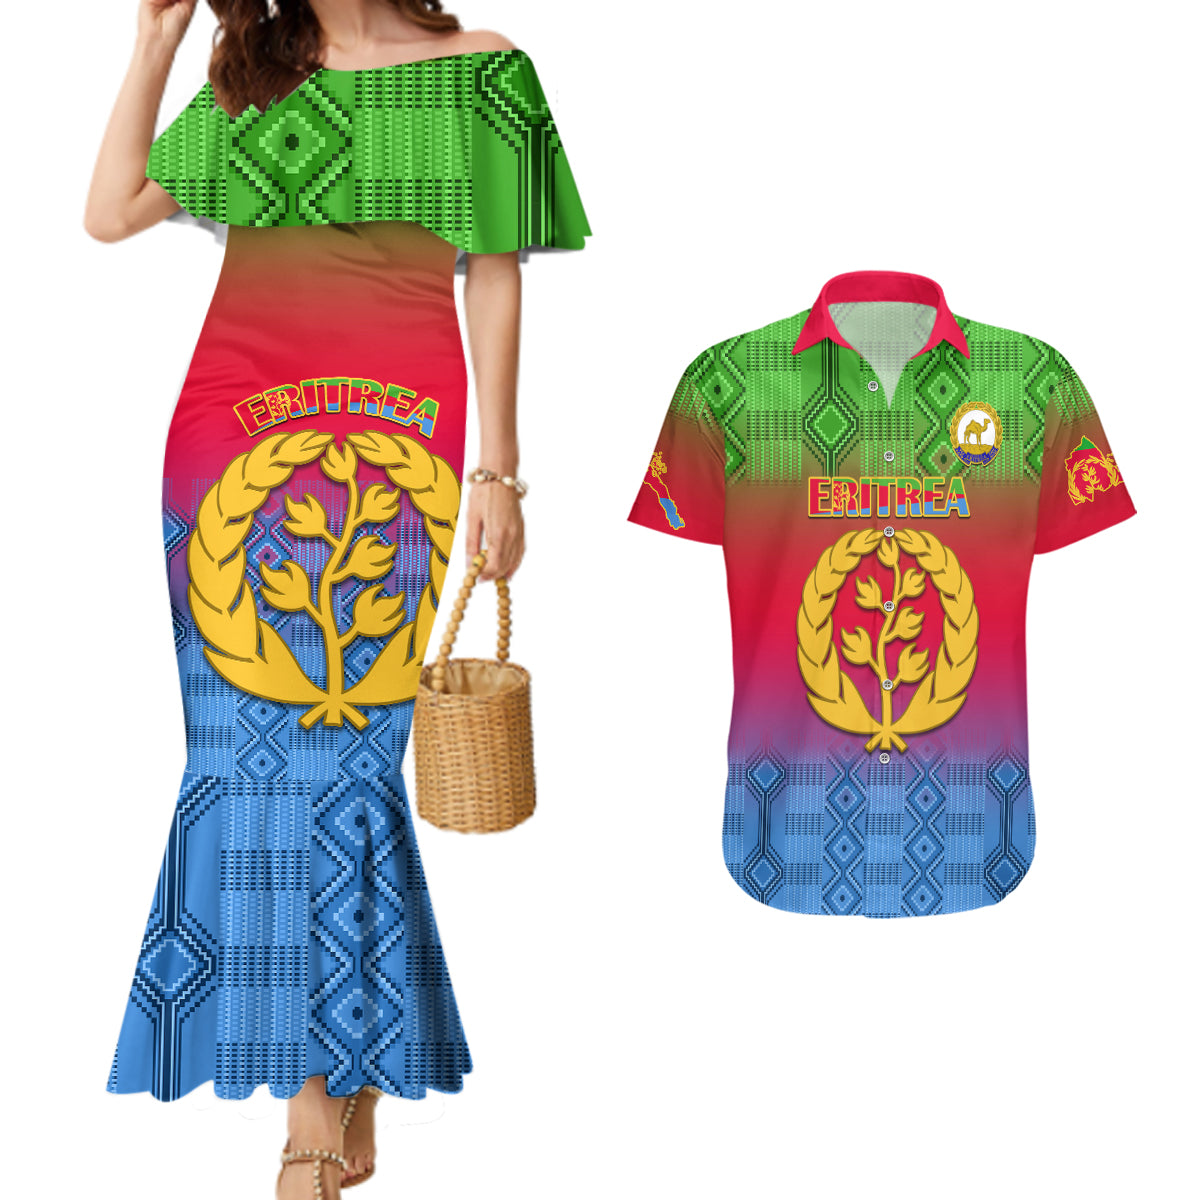 eritrea-revolution-day-couples-matching-mermaid-dress-and-hawaiian-shirt-eritean-kente-pattern-gradient-style